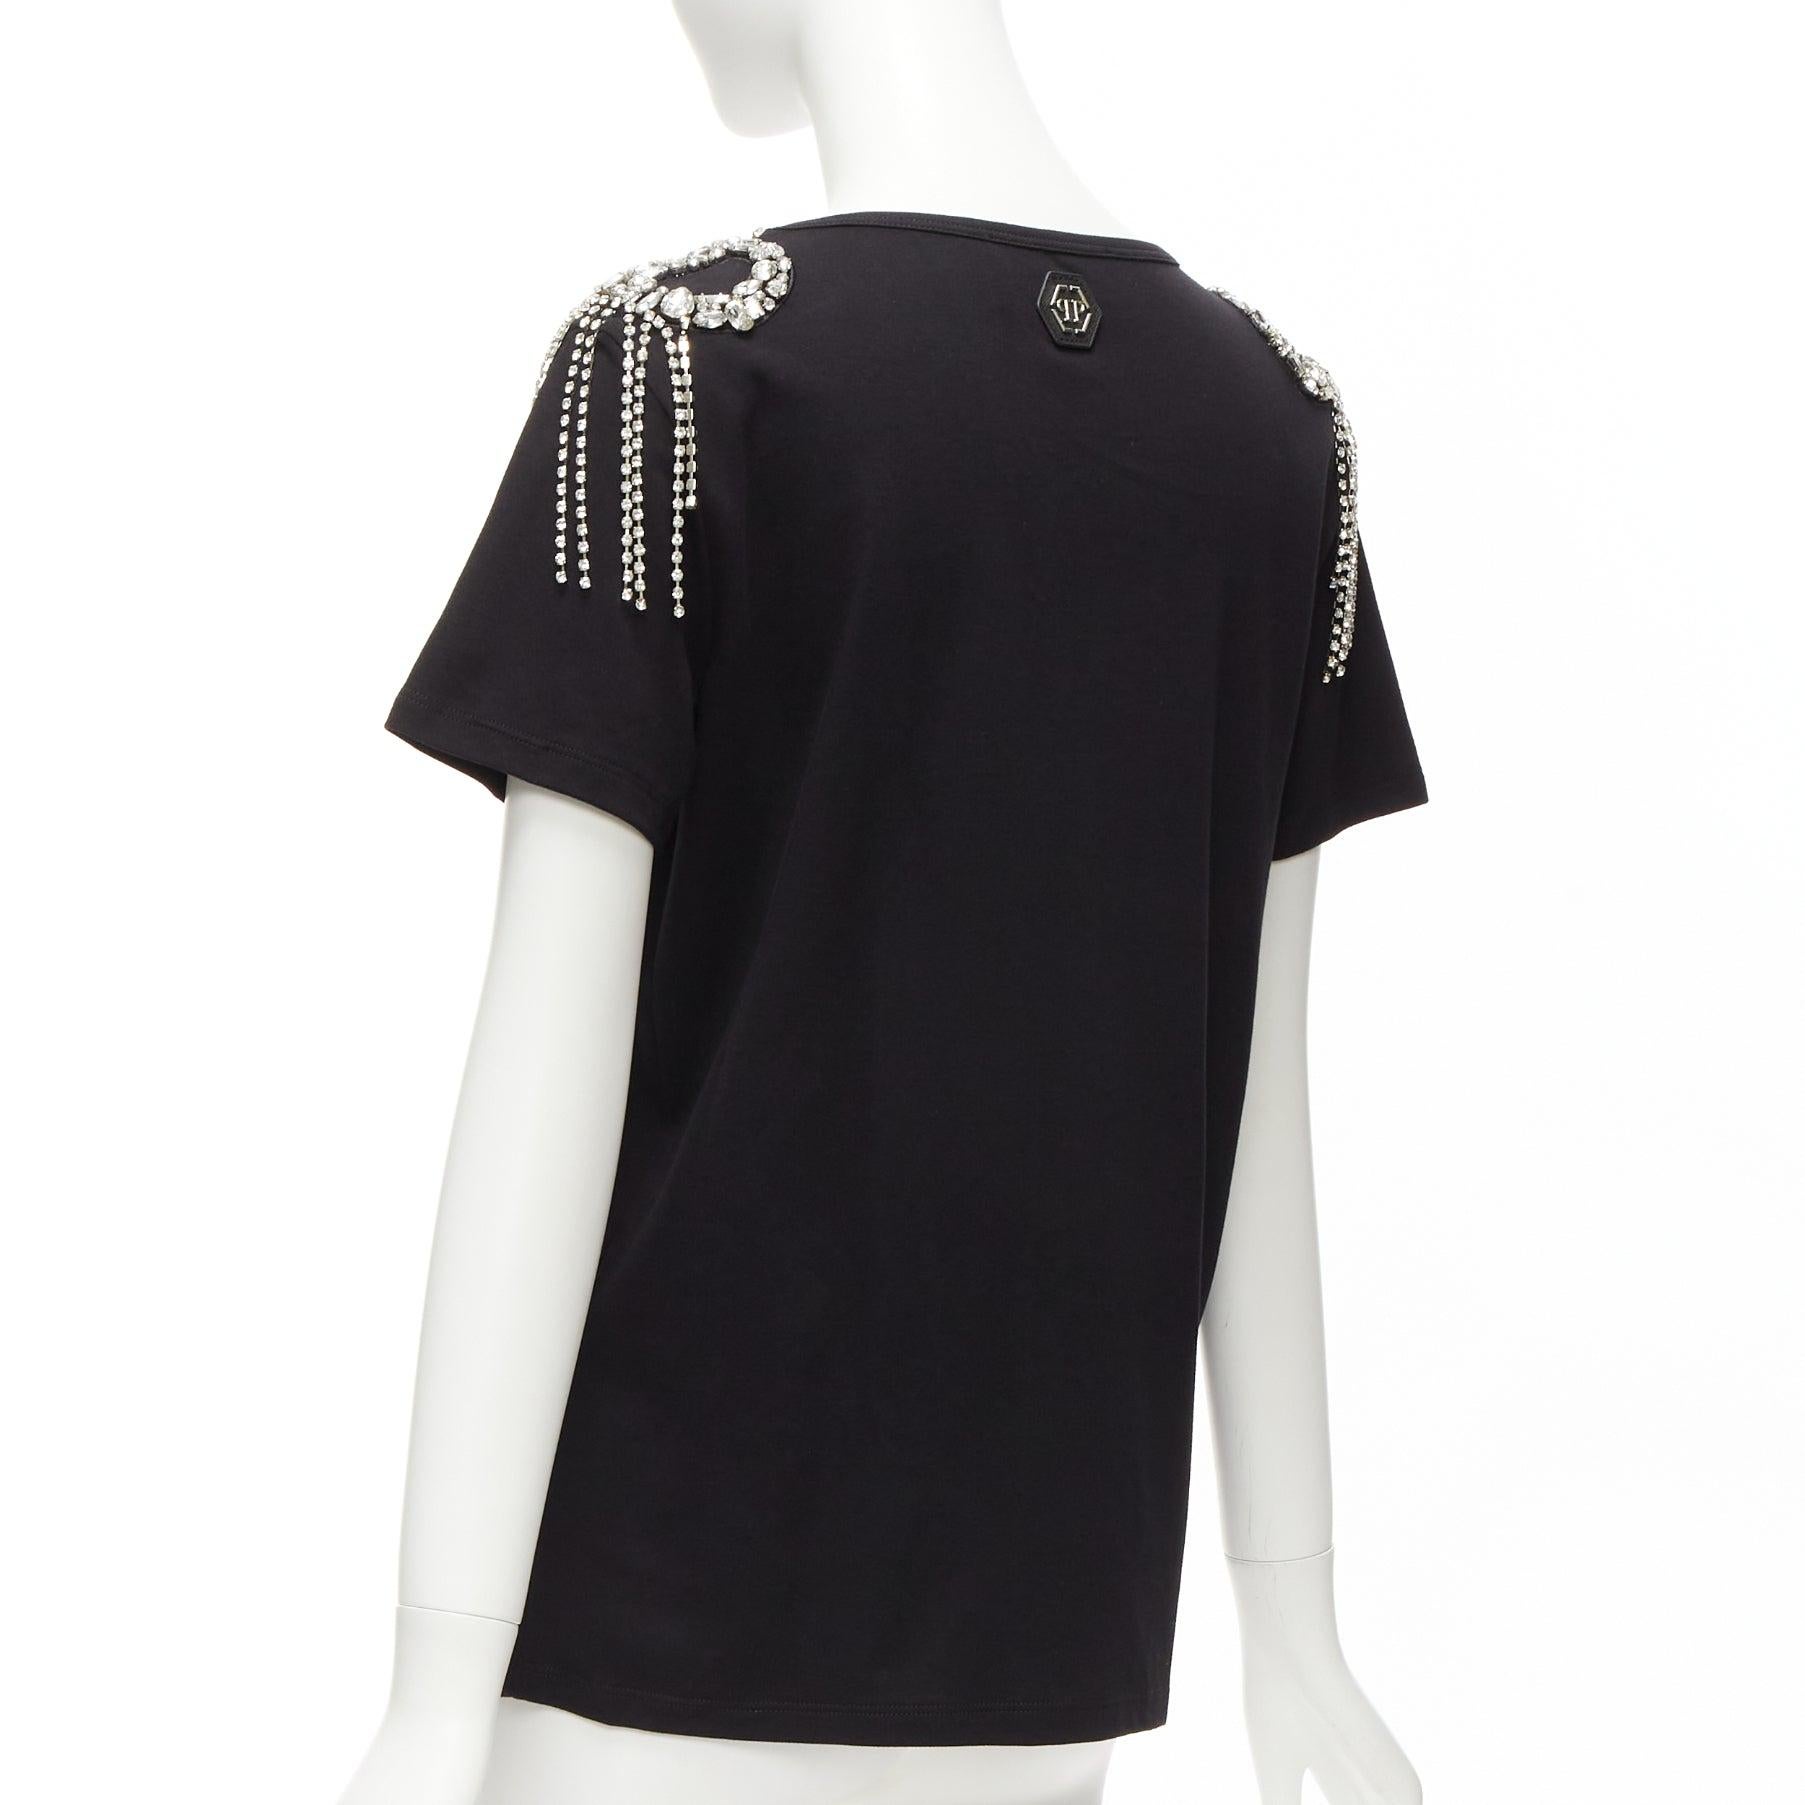 PHILLIP PLEIN FEMME black embroidery clear crystal fringe embellished tshirt XS For Sale 2